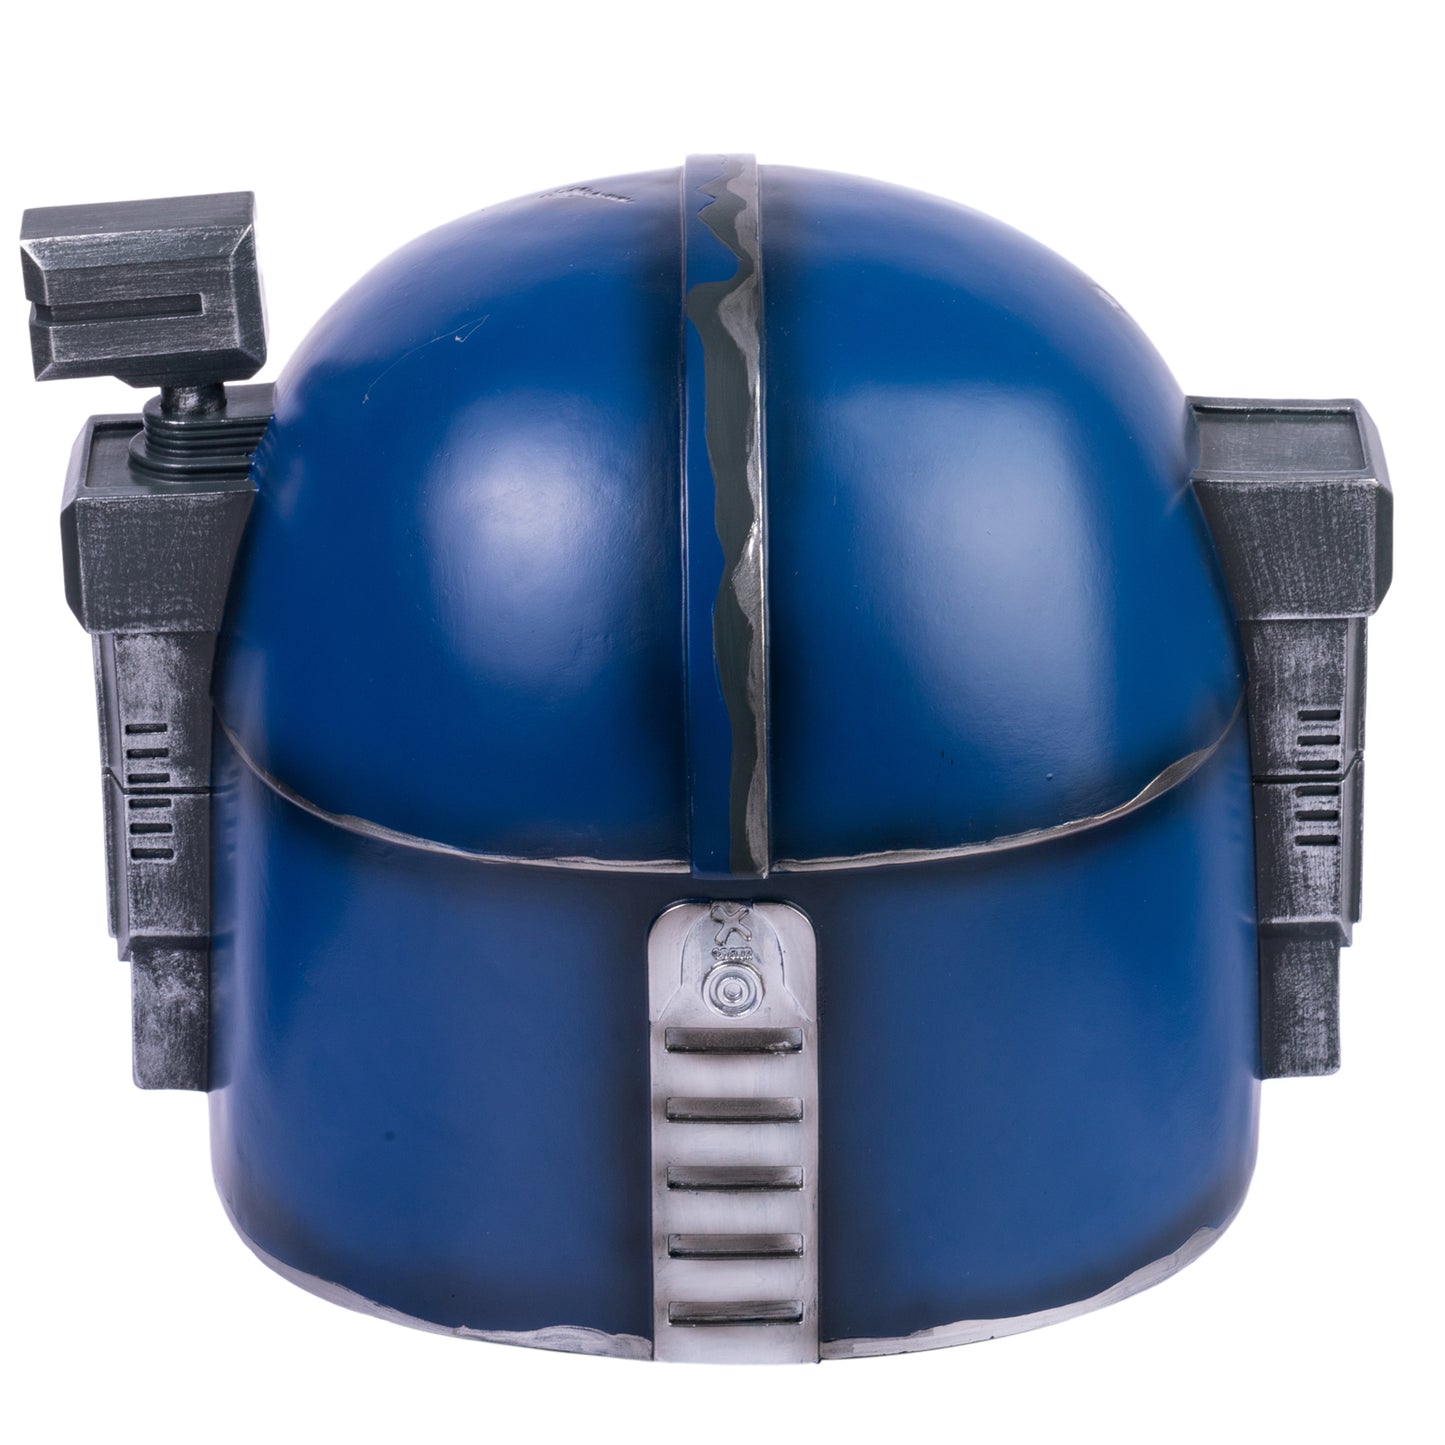 【Neu eingetroffen】Xcoser 1:1 Star Wars The Mandalorianer Paz Vizsla Helm Cosplay Requisiten Helmet